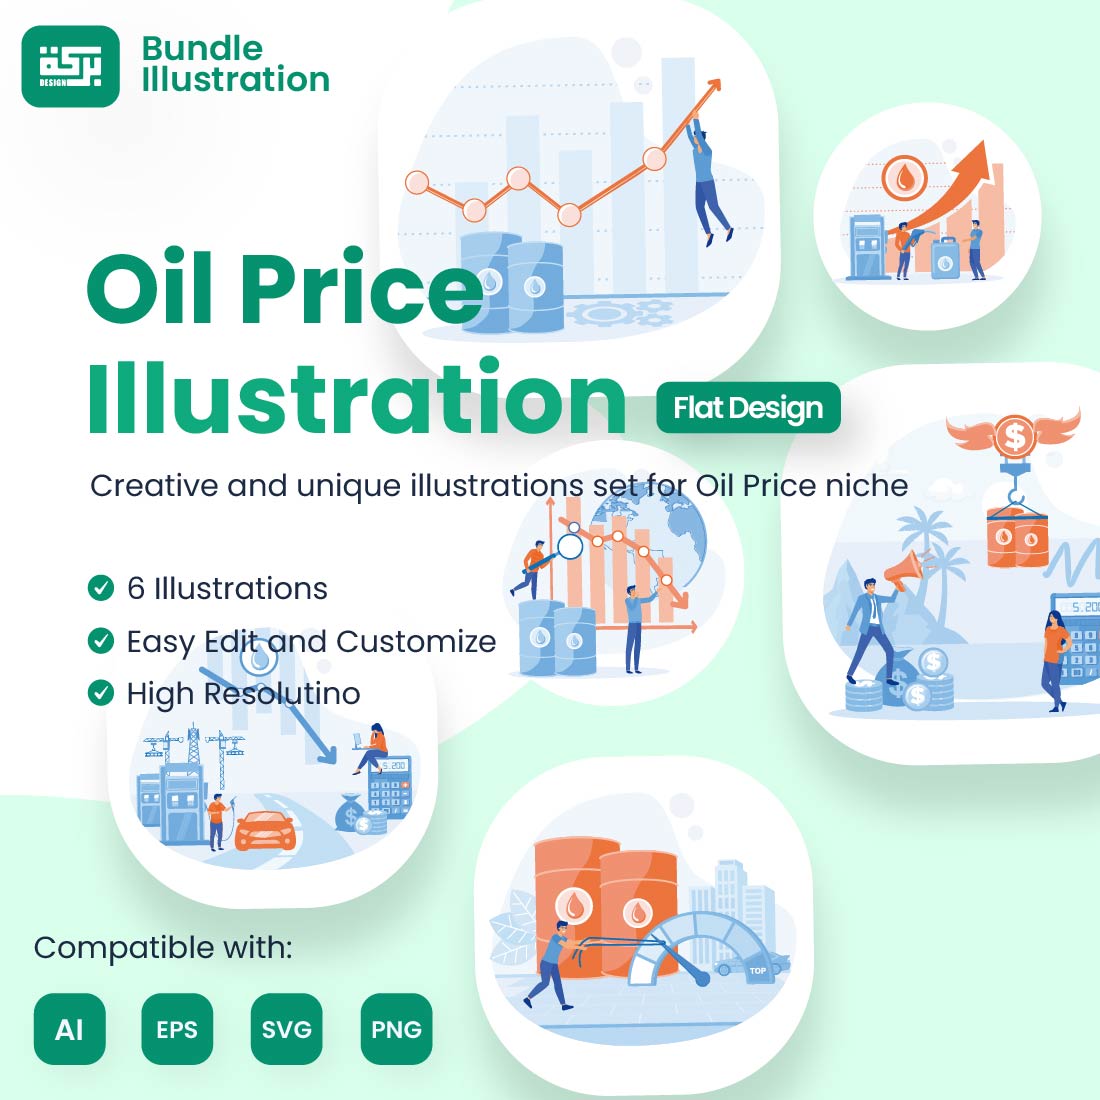 Design Illustration of Oil Price cover image.